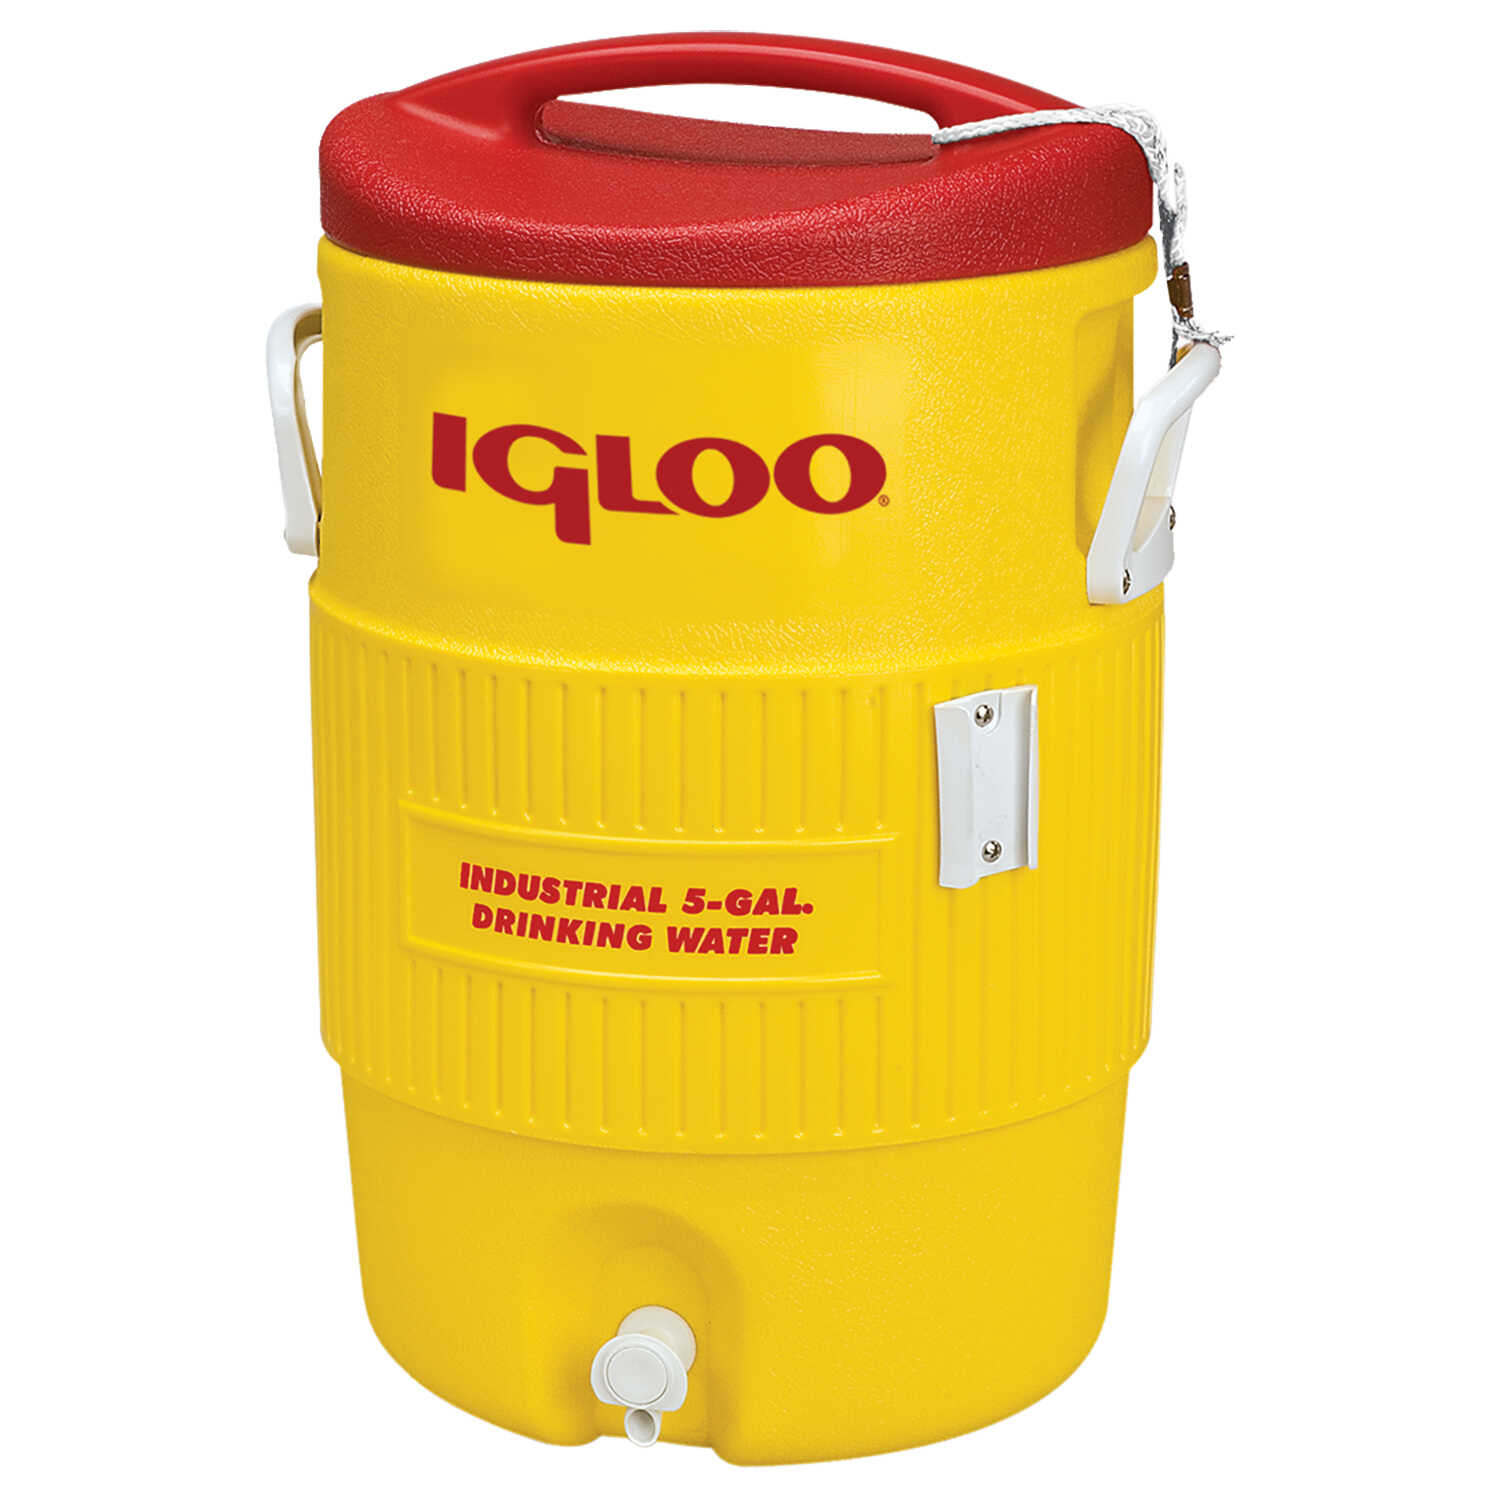 Igloo 400 Series Water Coolers